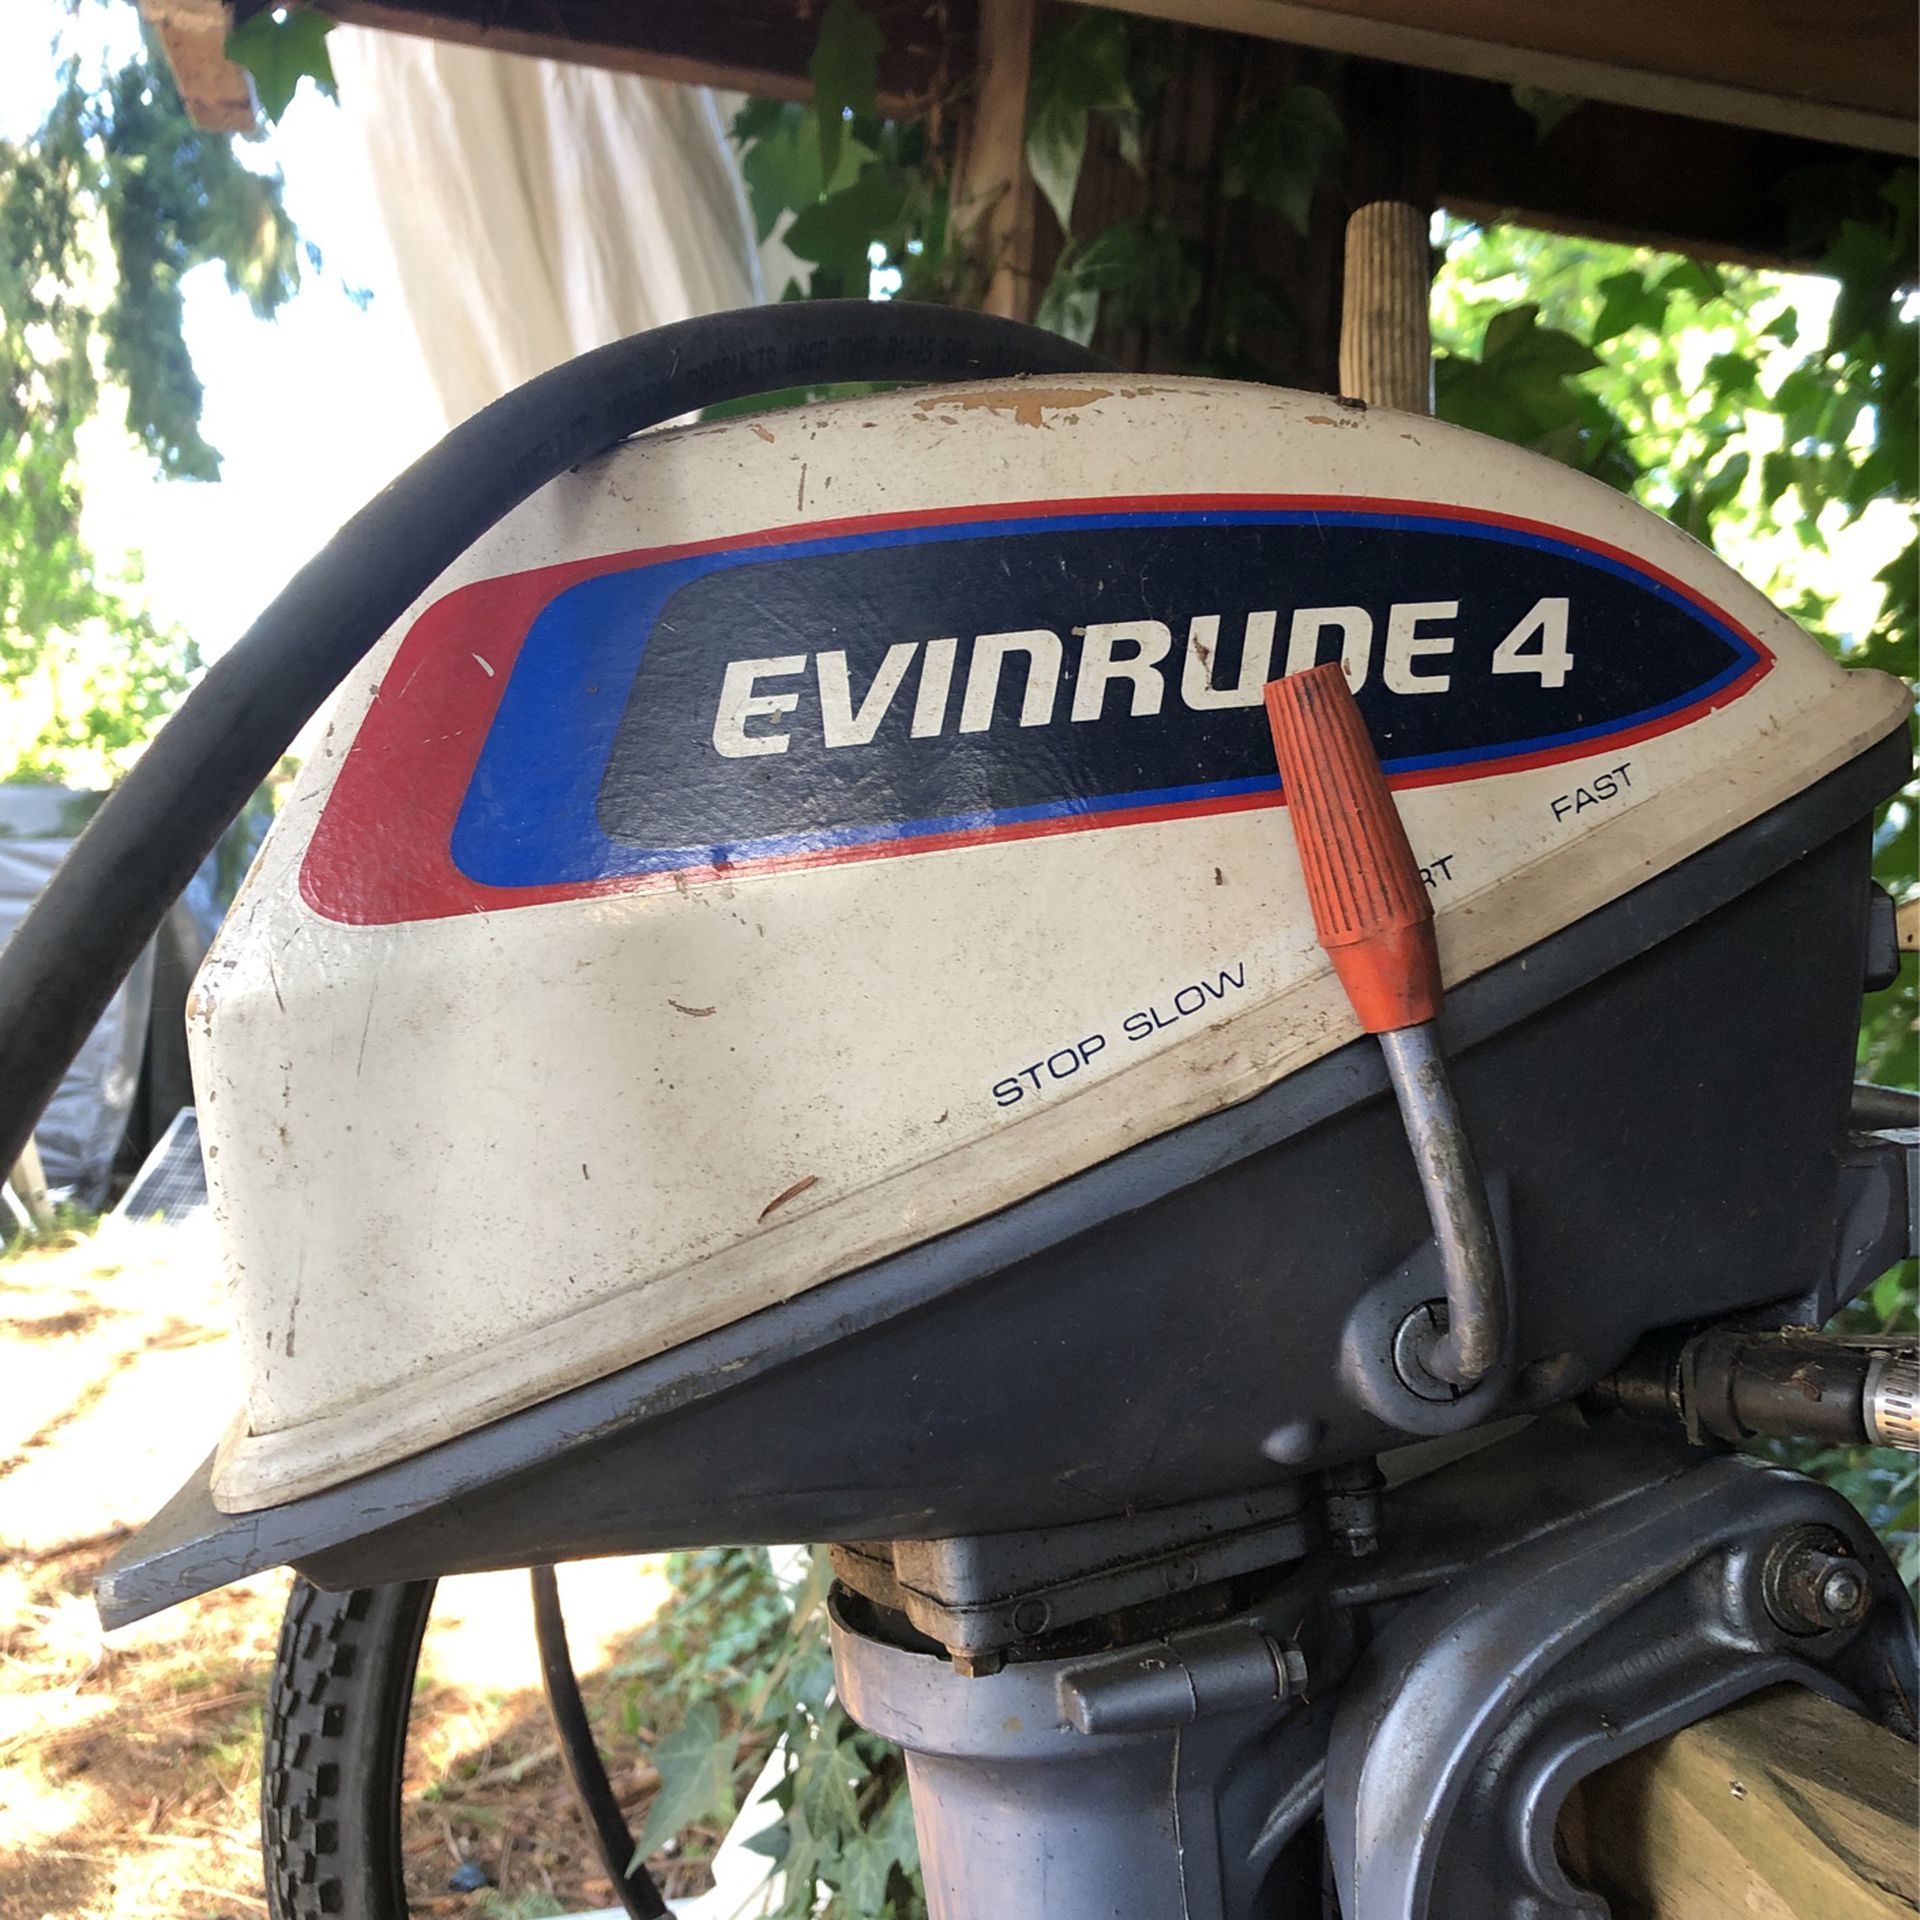 Evinrude 4hp Outboard Motor